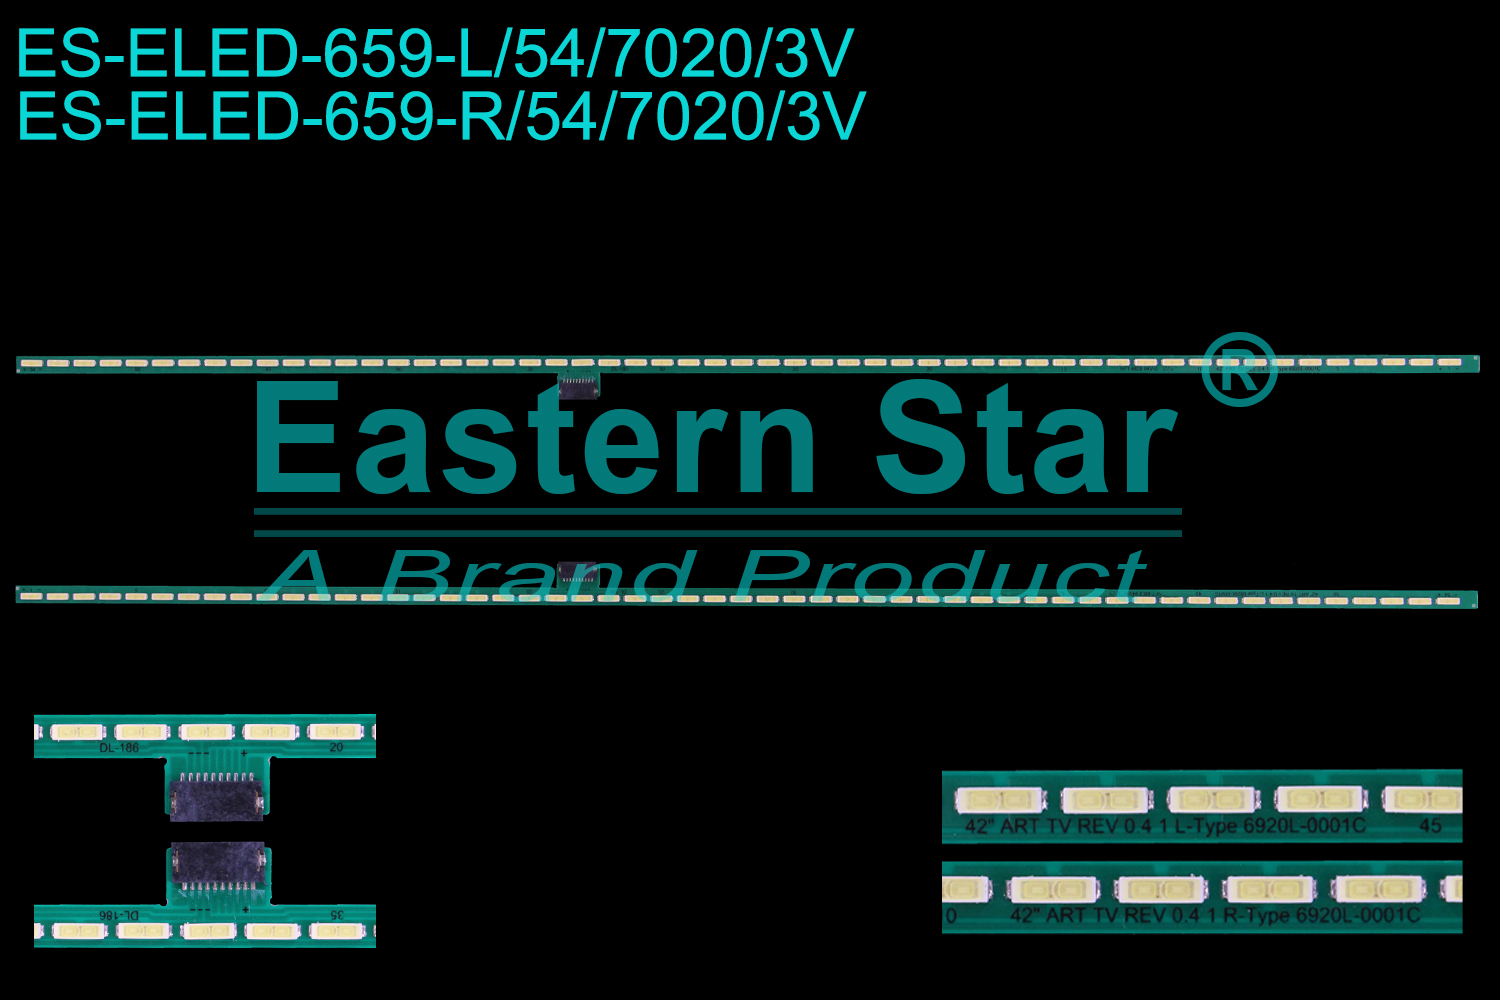 ES-ELED-659 ELED/EDGE TV backlight use for 42'' Lg 42LM640S  42''ART TV REV0.41 L-Type 6920L-0001C   42''ART TV REV0.41 R-Type 6920L-0001C LED STRIPS(2)